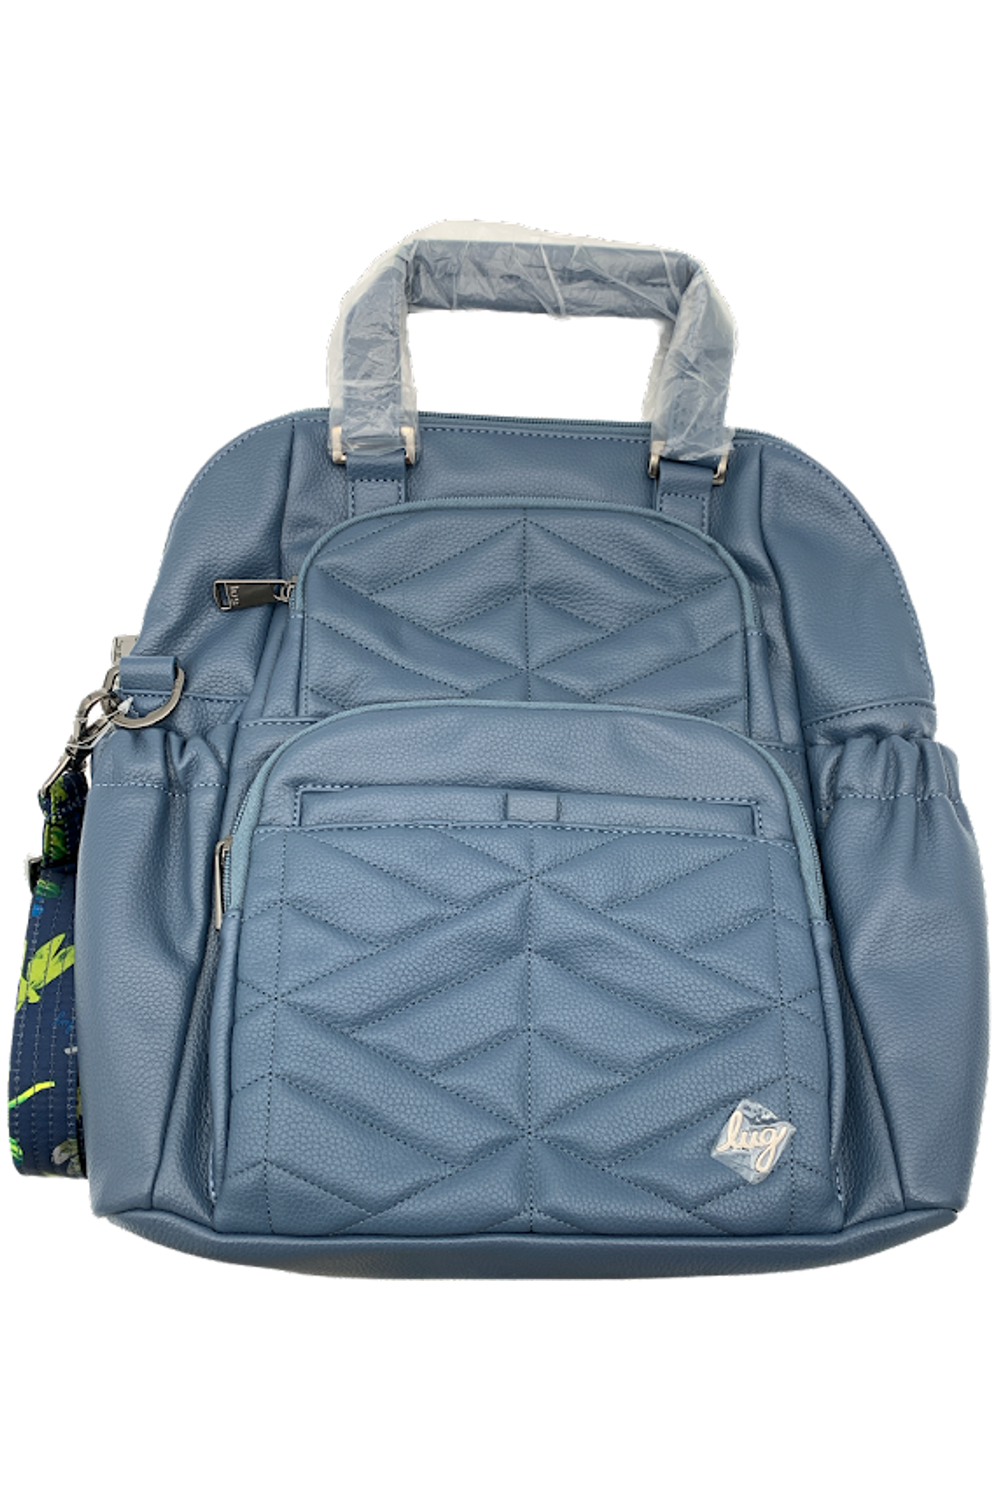 Lug Classic VL Convertible Backpack Canter Slate Blue